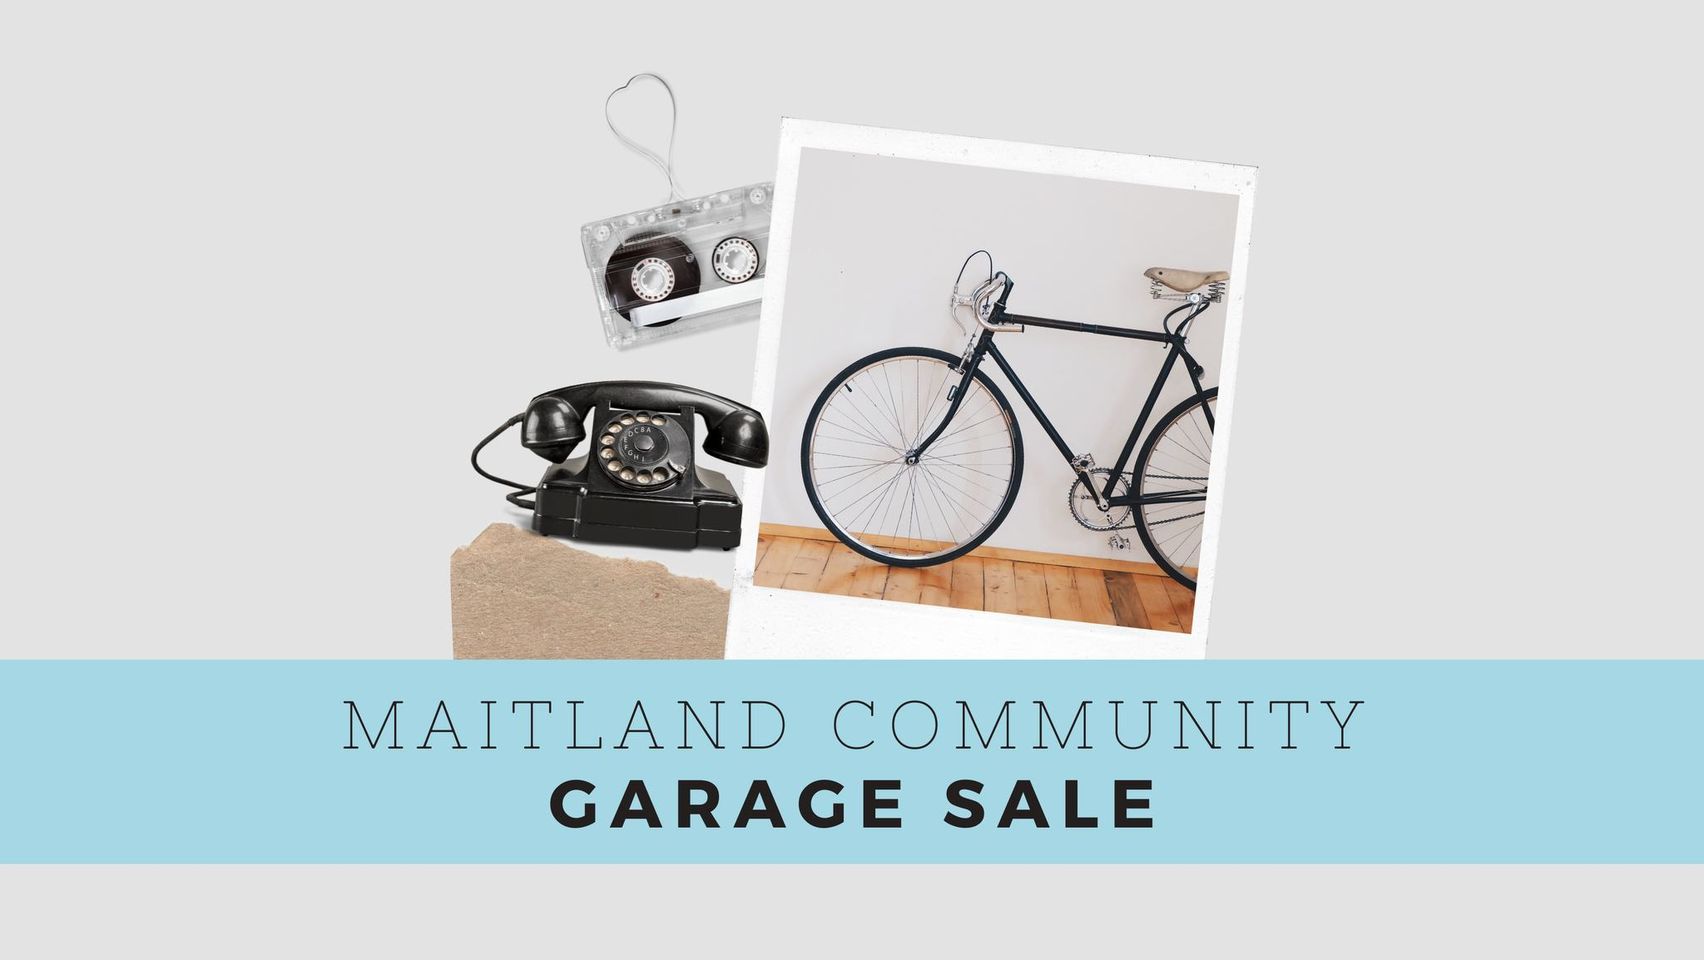 Maitland Community Garage Sale @ Maitland, Ontario